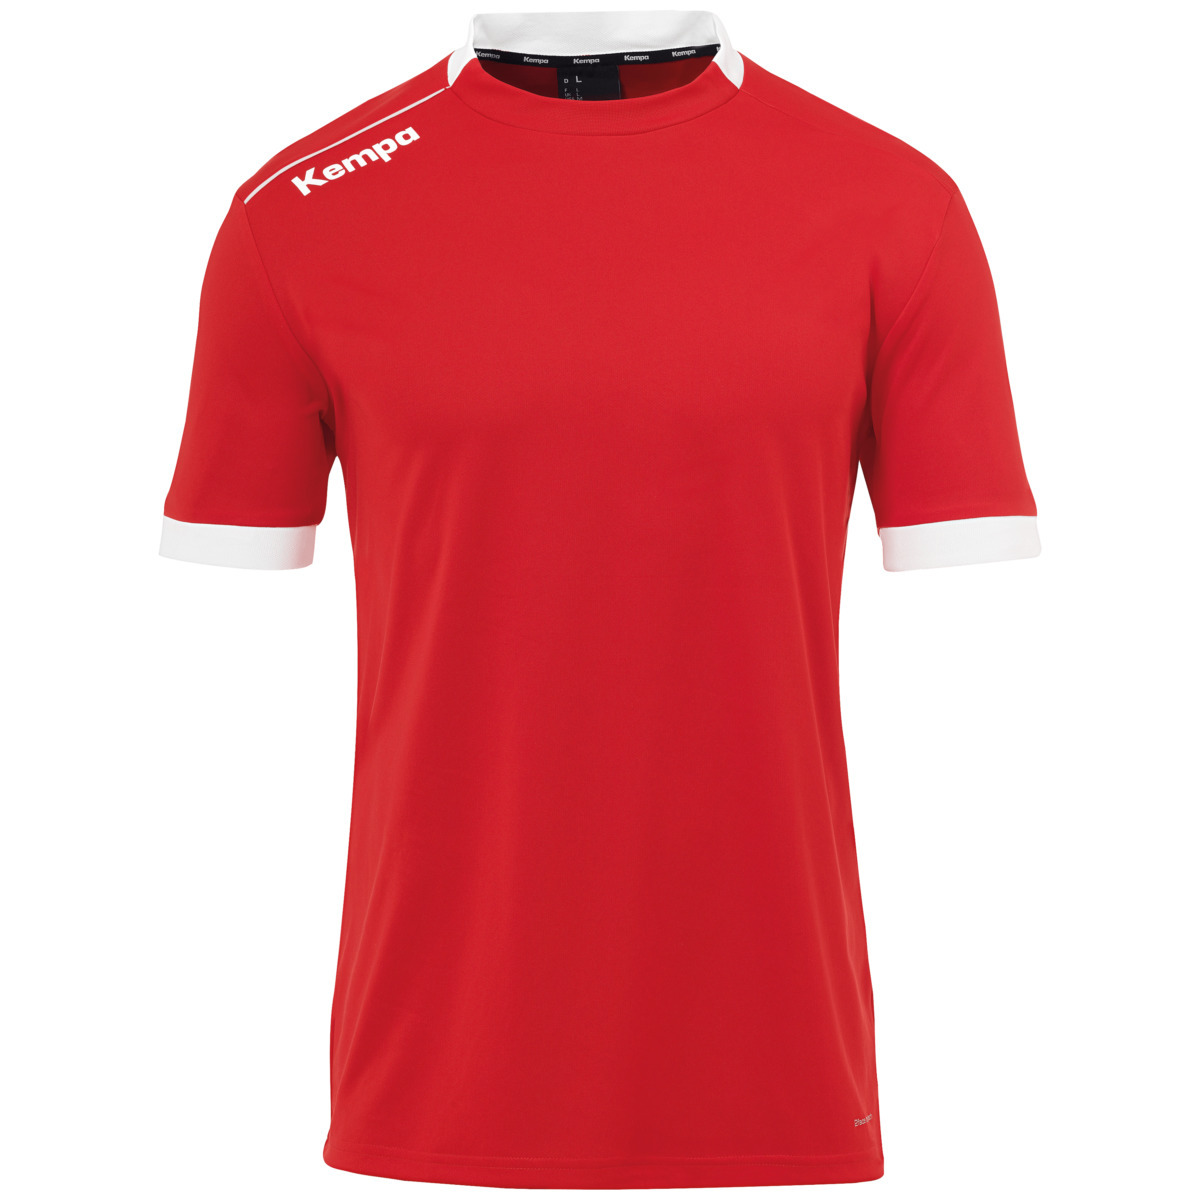 Camiseta Kempa Player - rojo-blanco - 